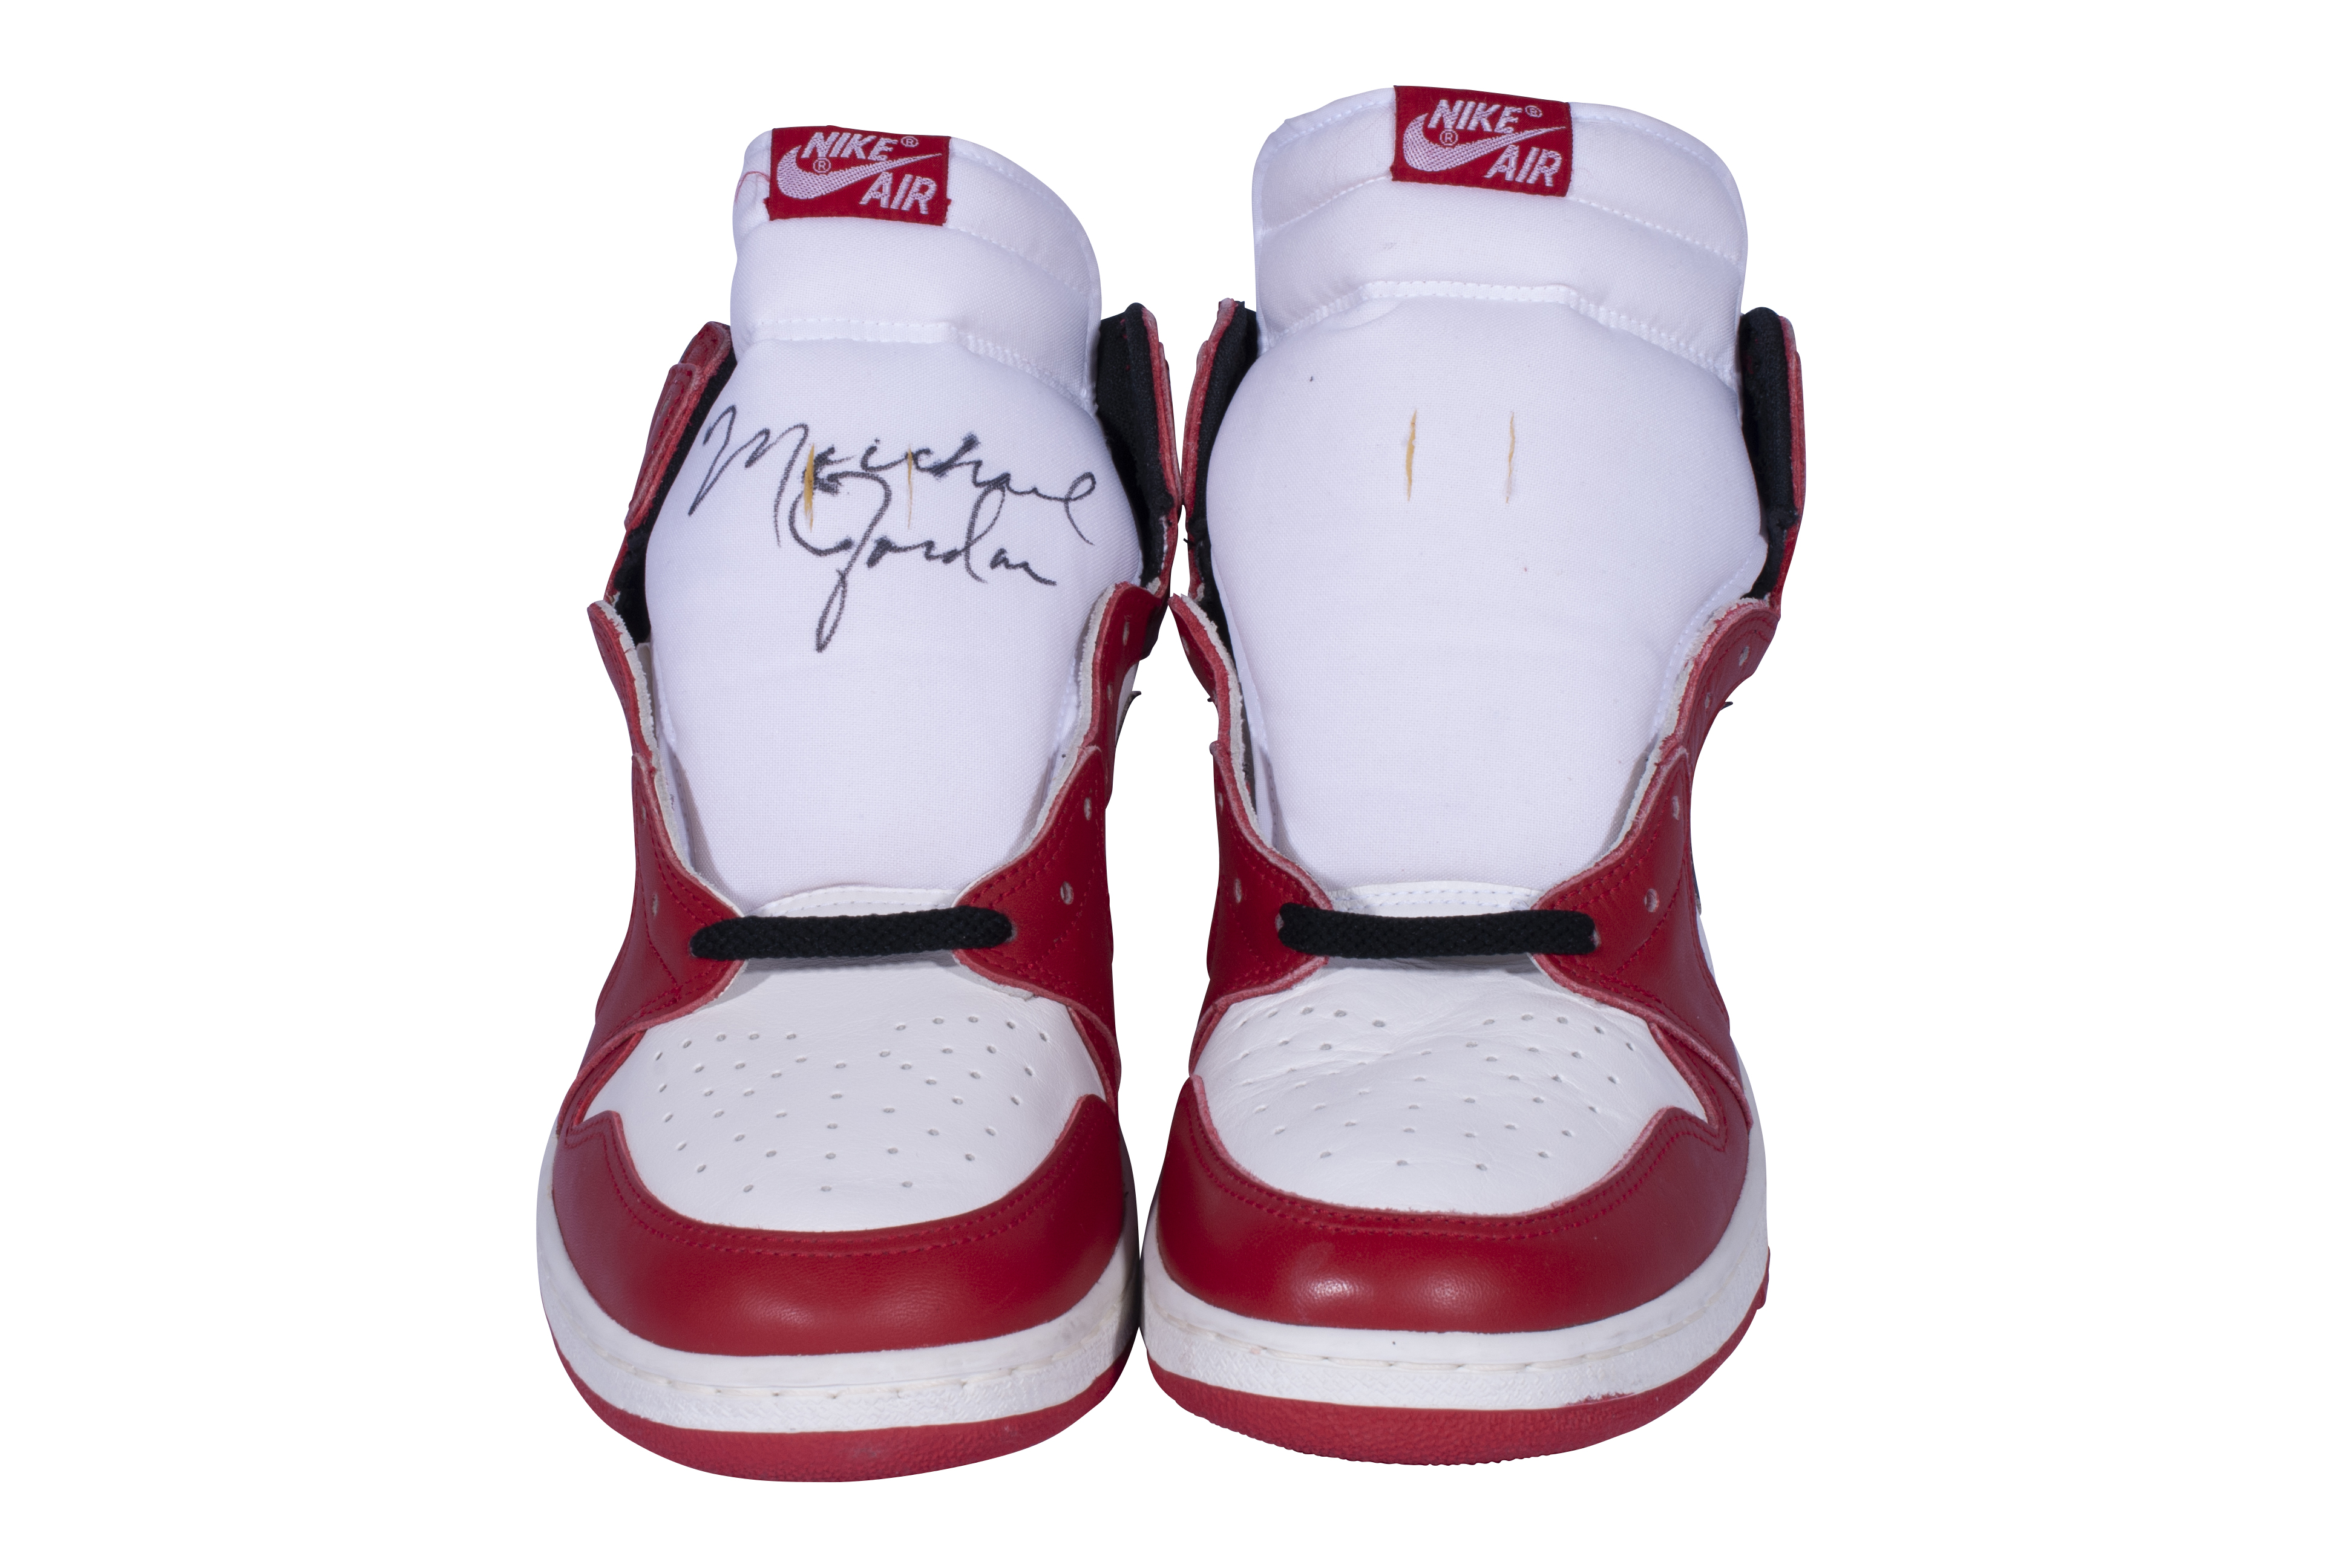 MICHAEL JORDAN Rookie 1985 signed AIR JORDAN 1 sneakers (Upper